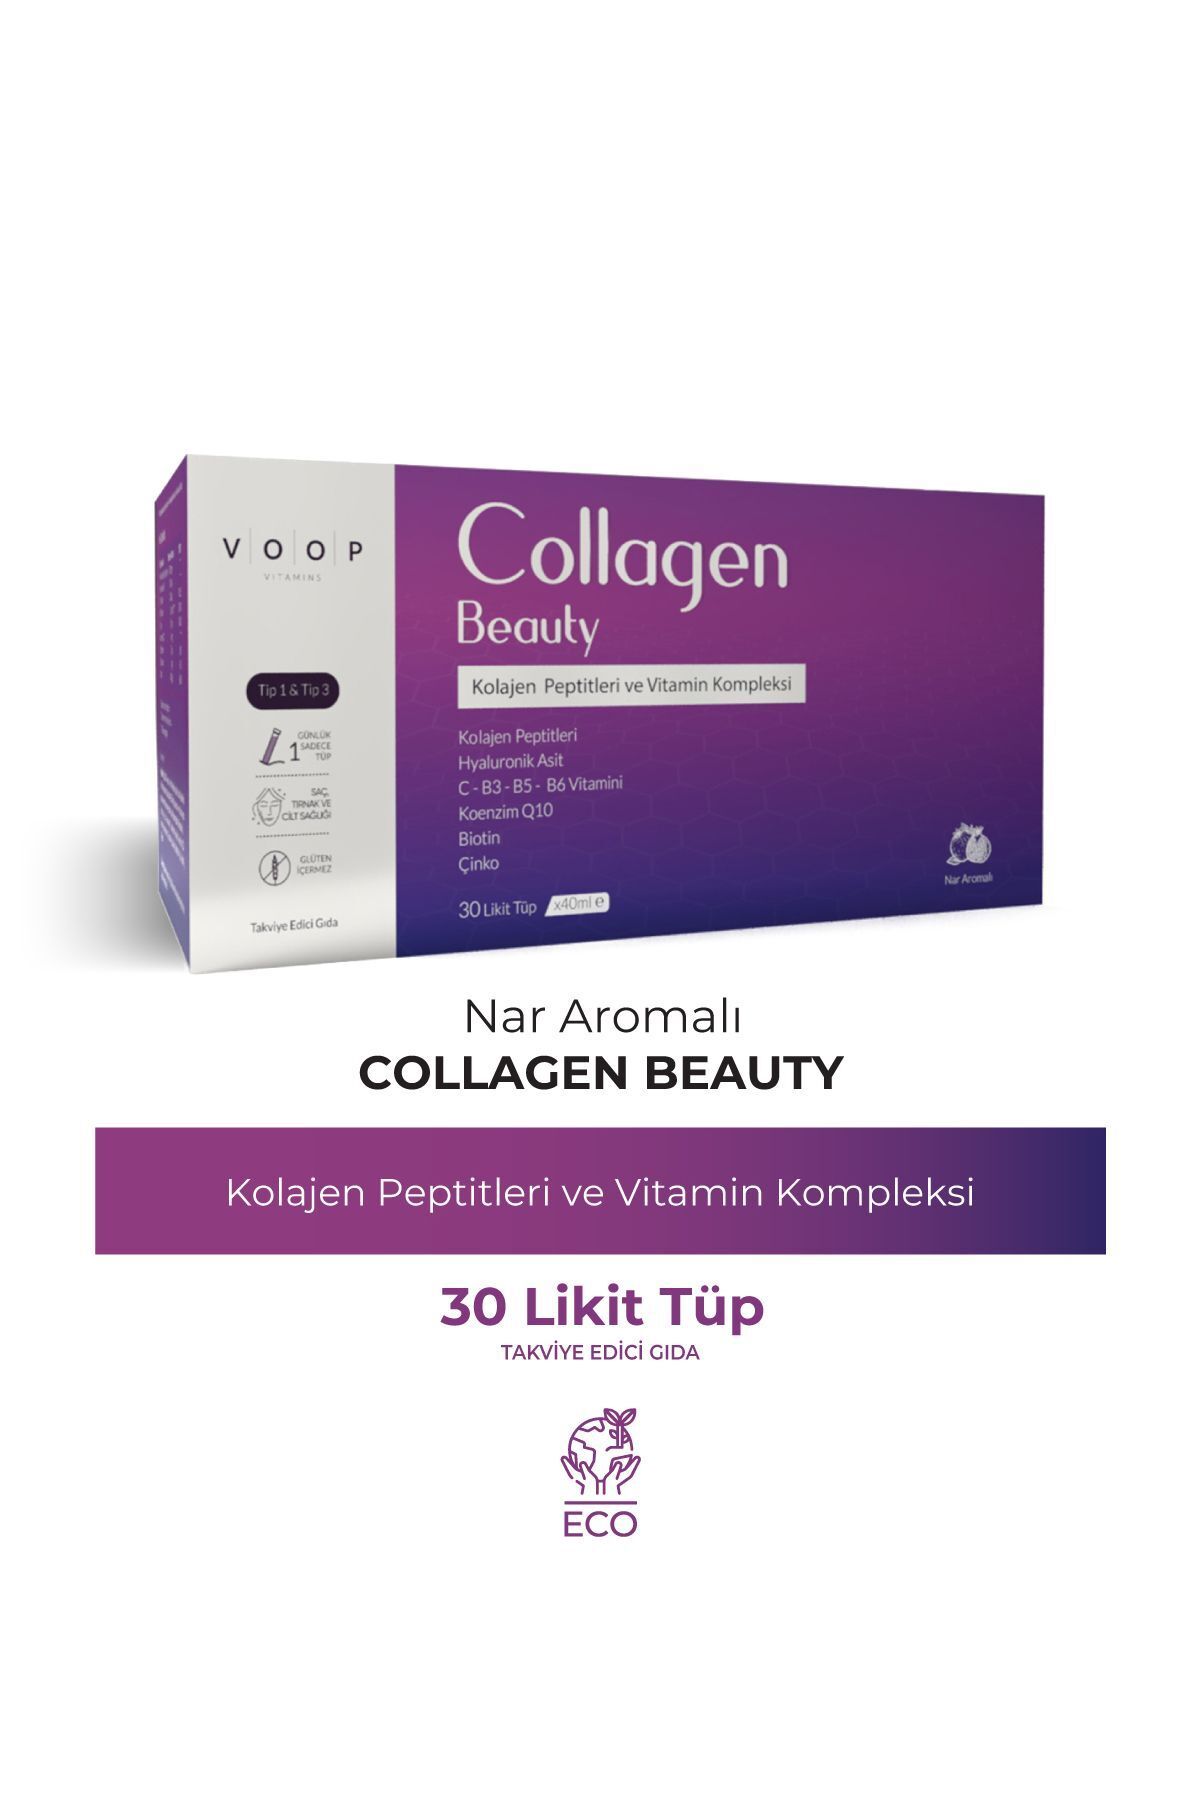 VOOP Collagen Beauty Nar Aromalı Shot Tip 1, Tip 3 | 5500 Mg - 40 ml 30 Tüp